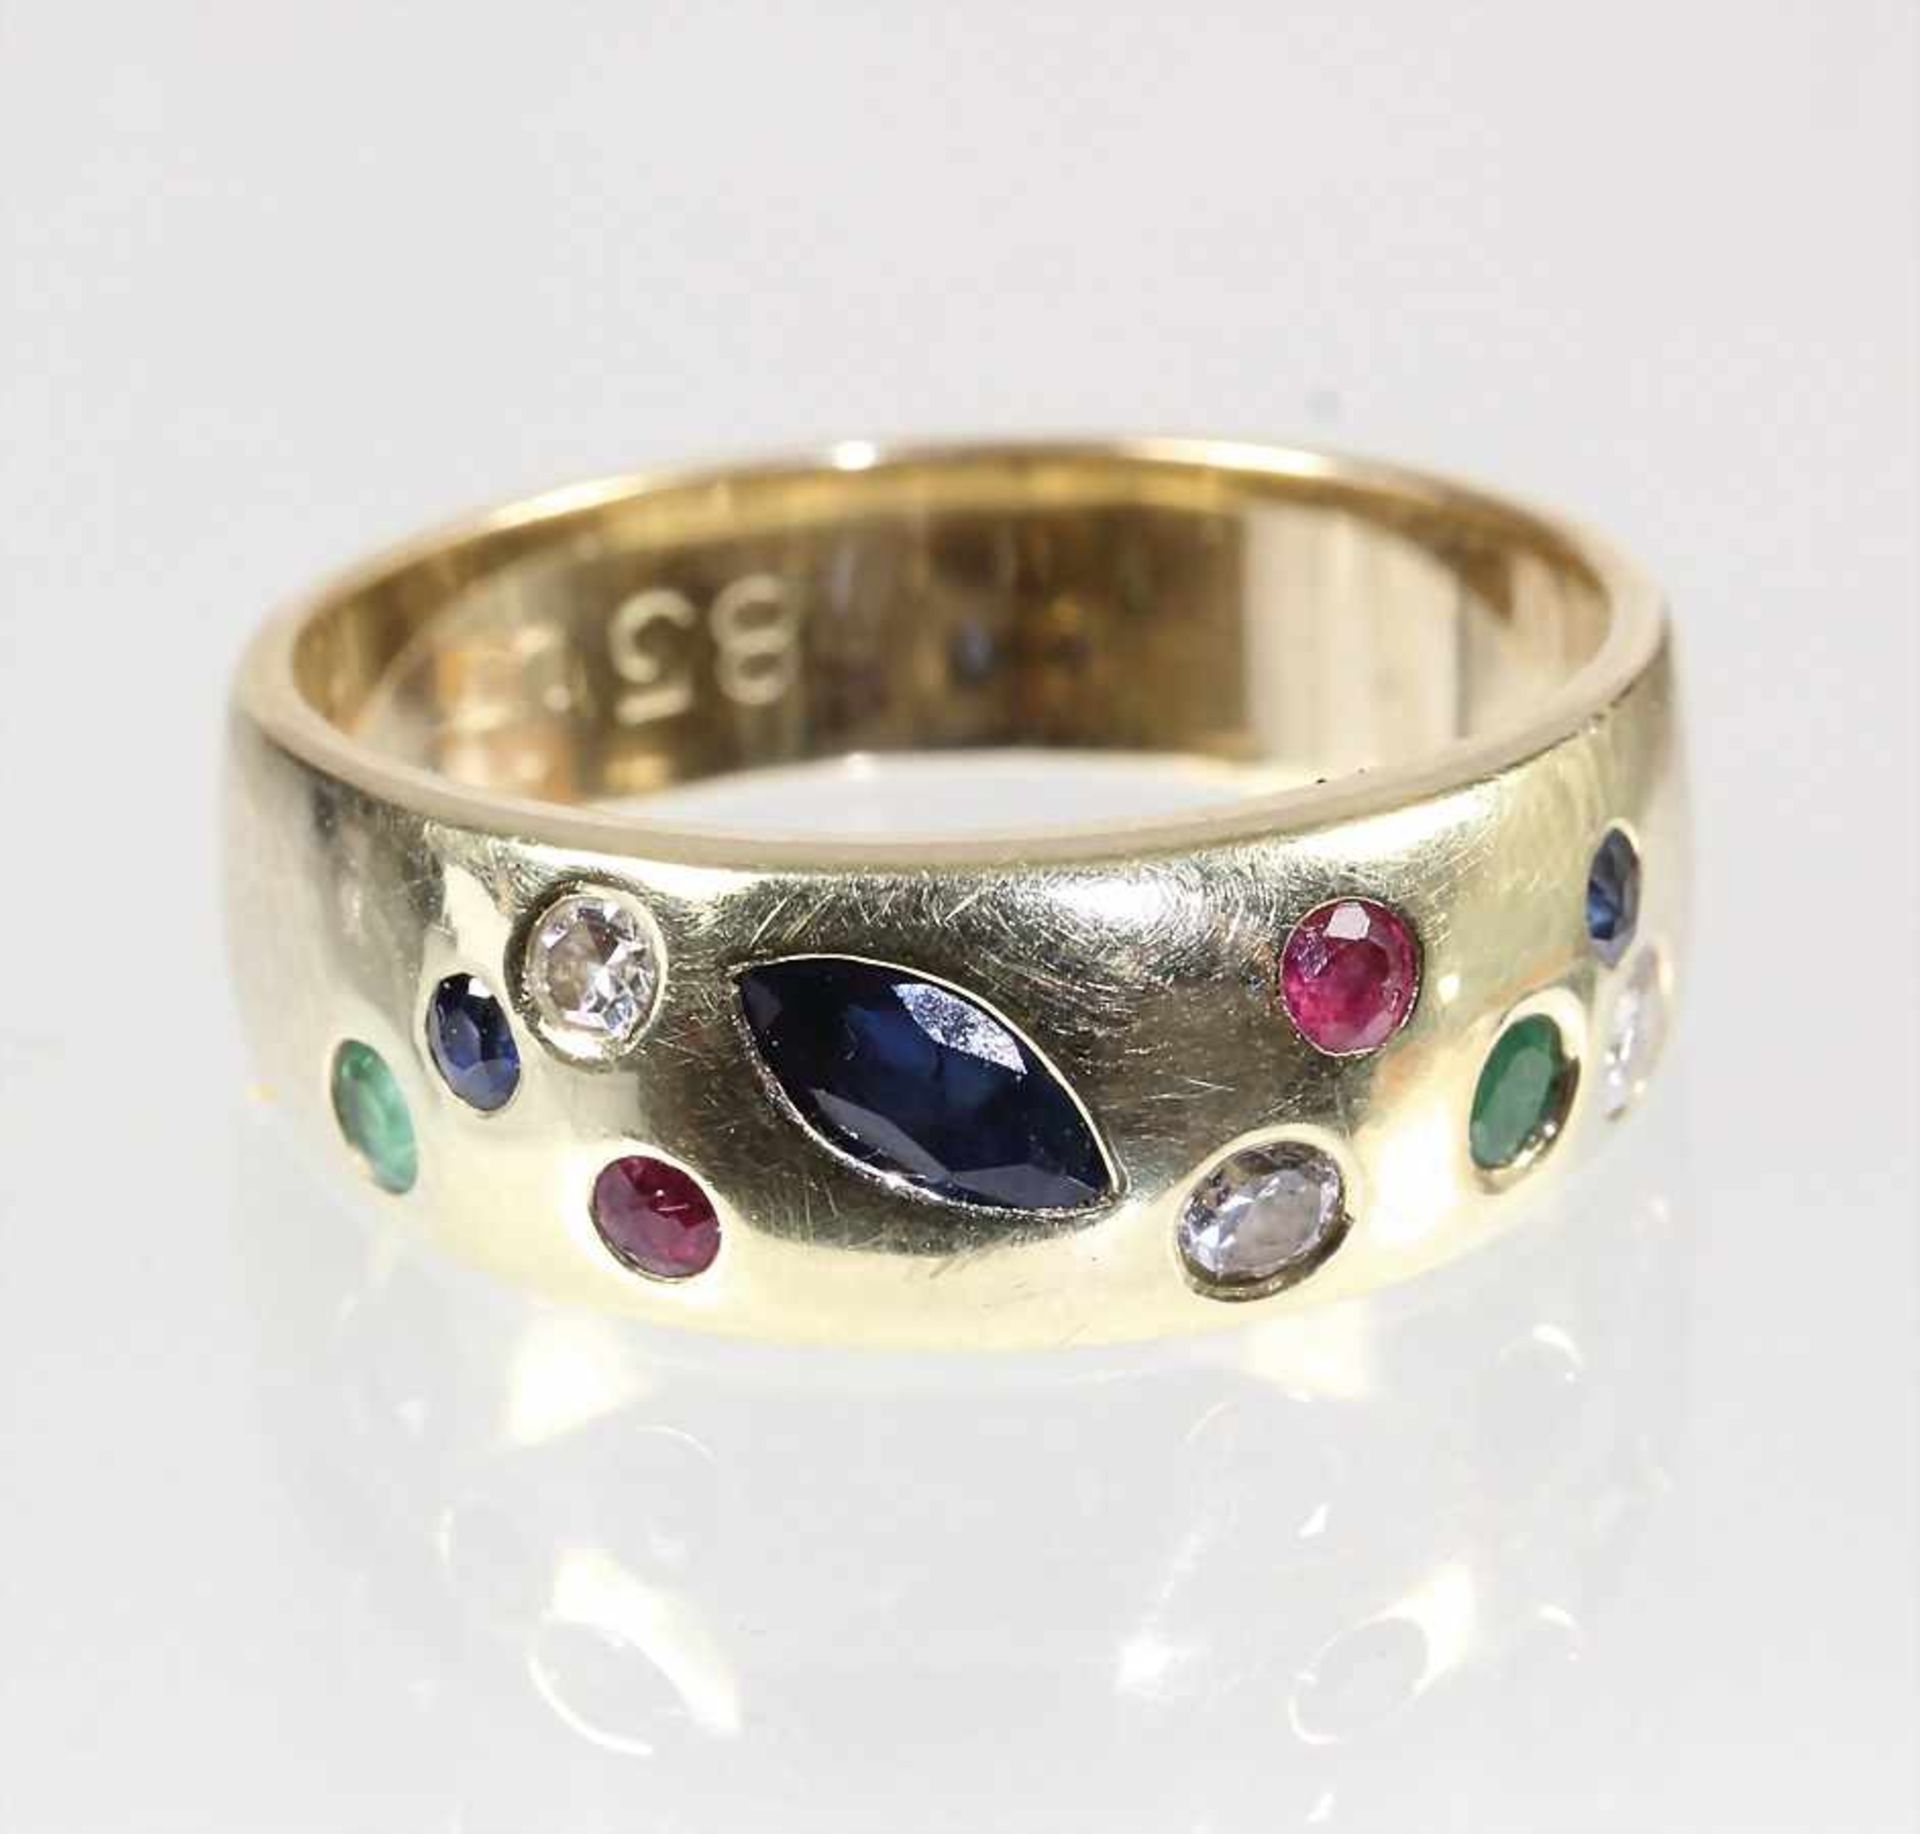 Ring, GG 585/000, 3 Brillanten/Diamanten ca. 0,11 ct weiß, je 2 Rubine u. Smaragde sowie 3